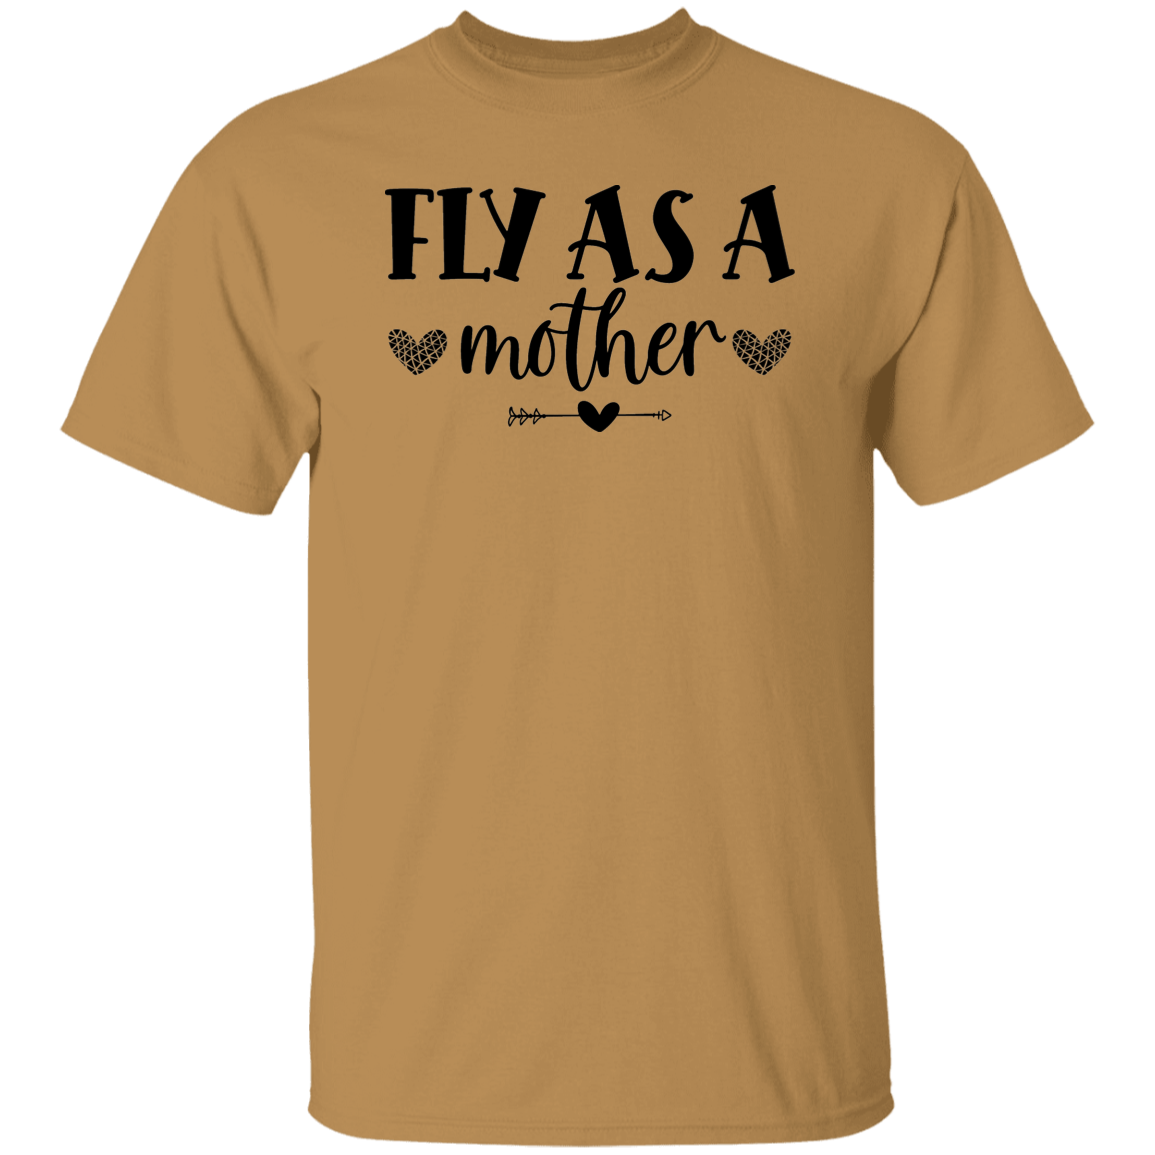 Fly 5.3 oz. T-Shirt